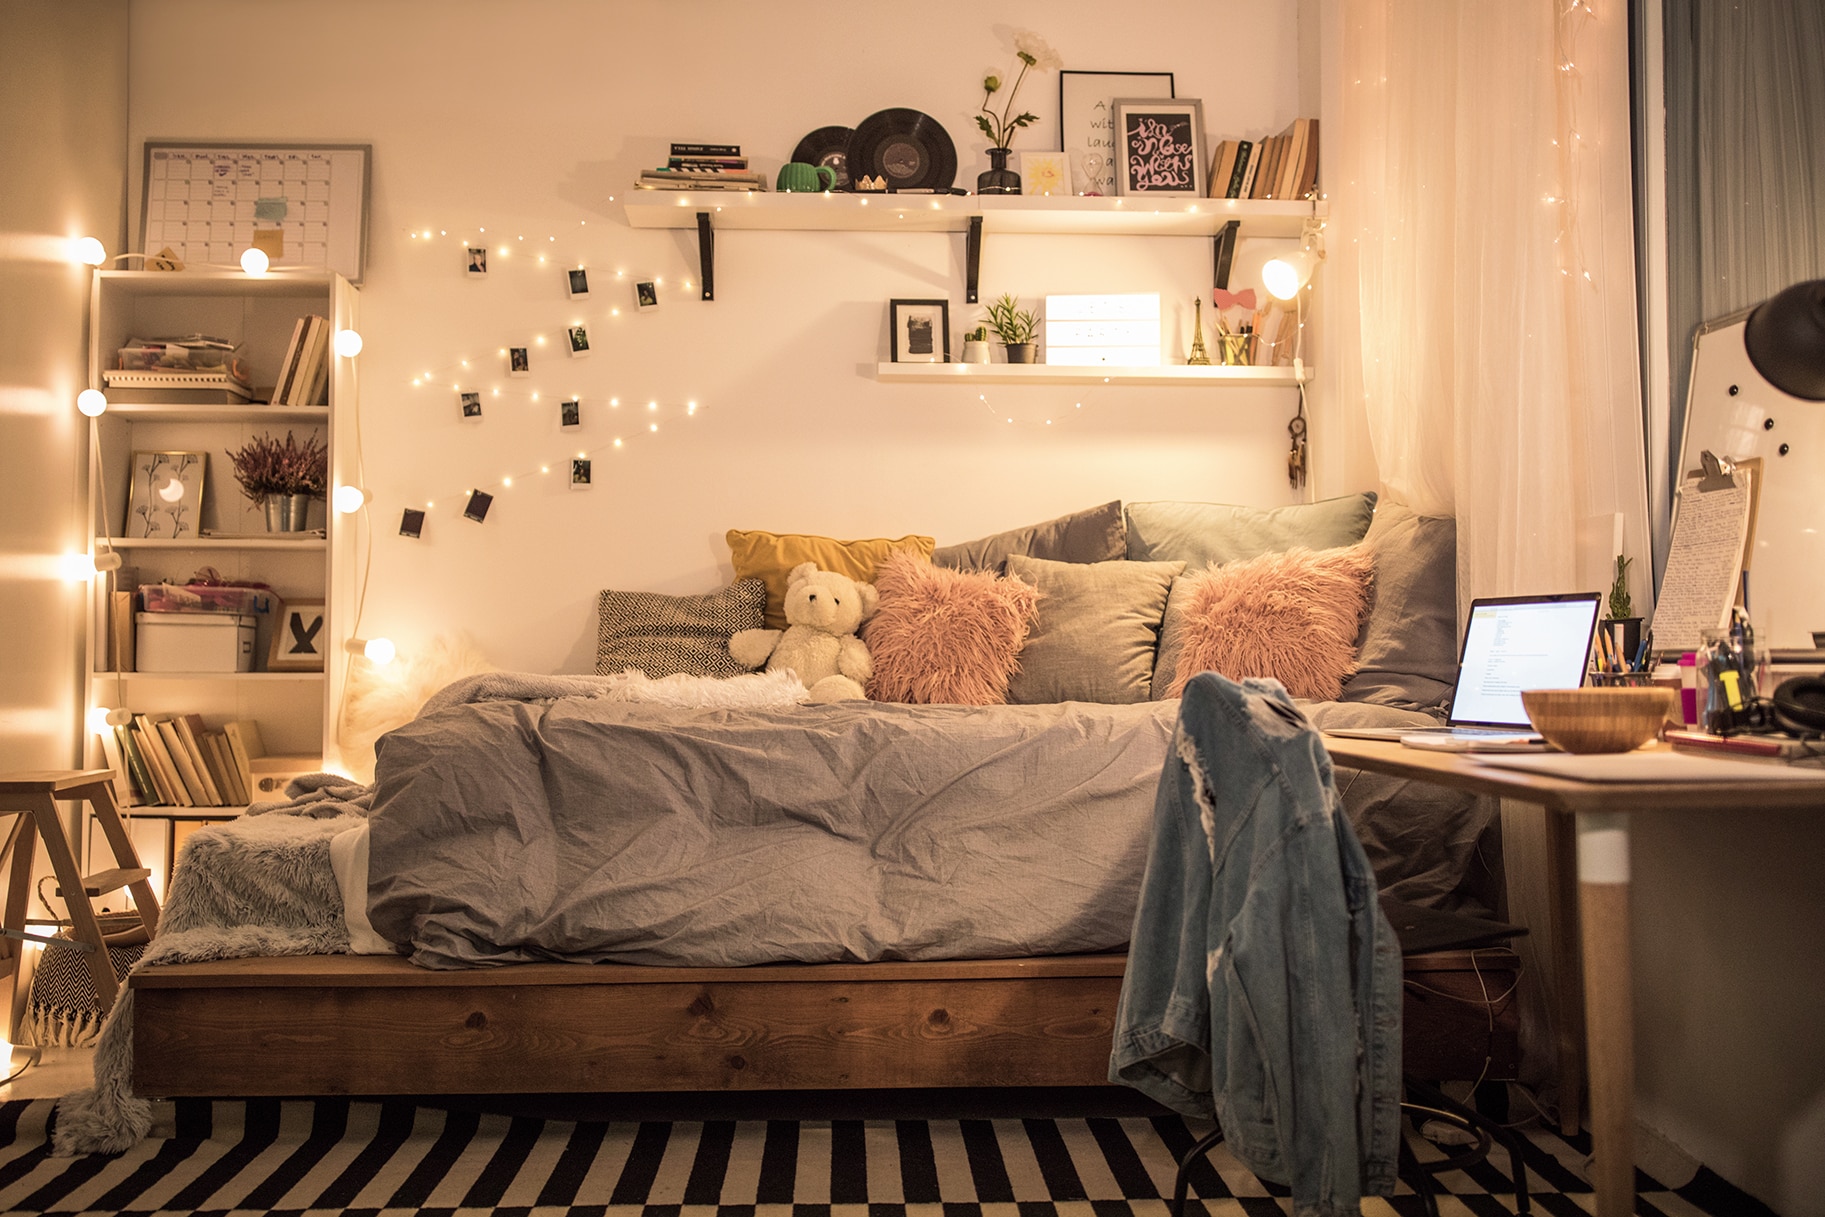 tumblr aesthetic dorm room